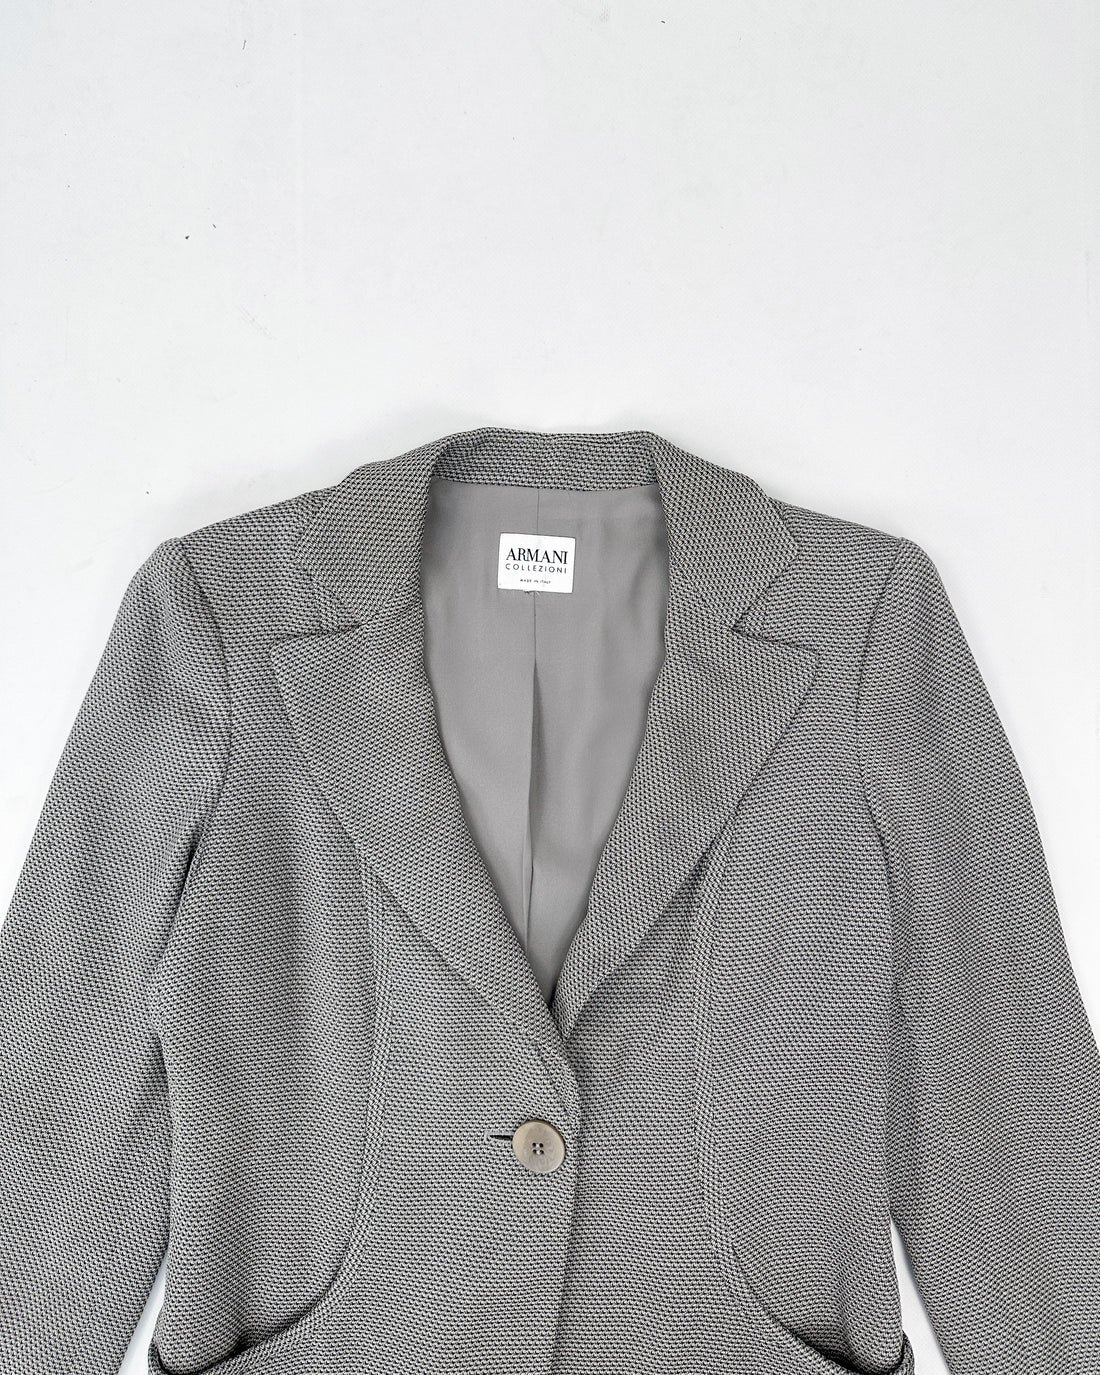 Armani Wolf Grey Textured Blazer 1990's